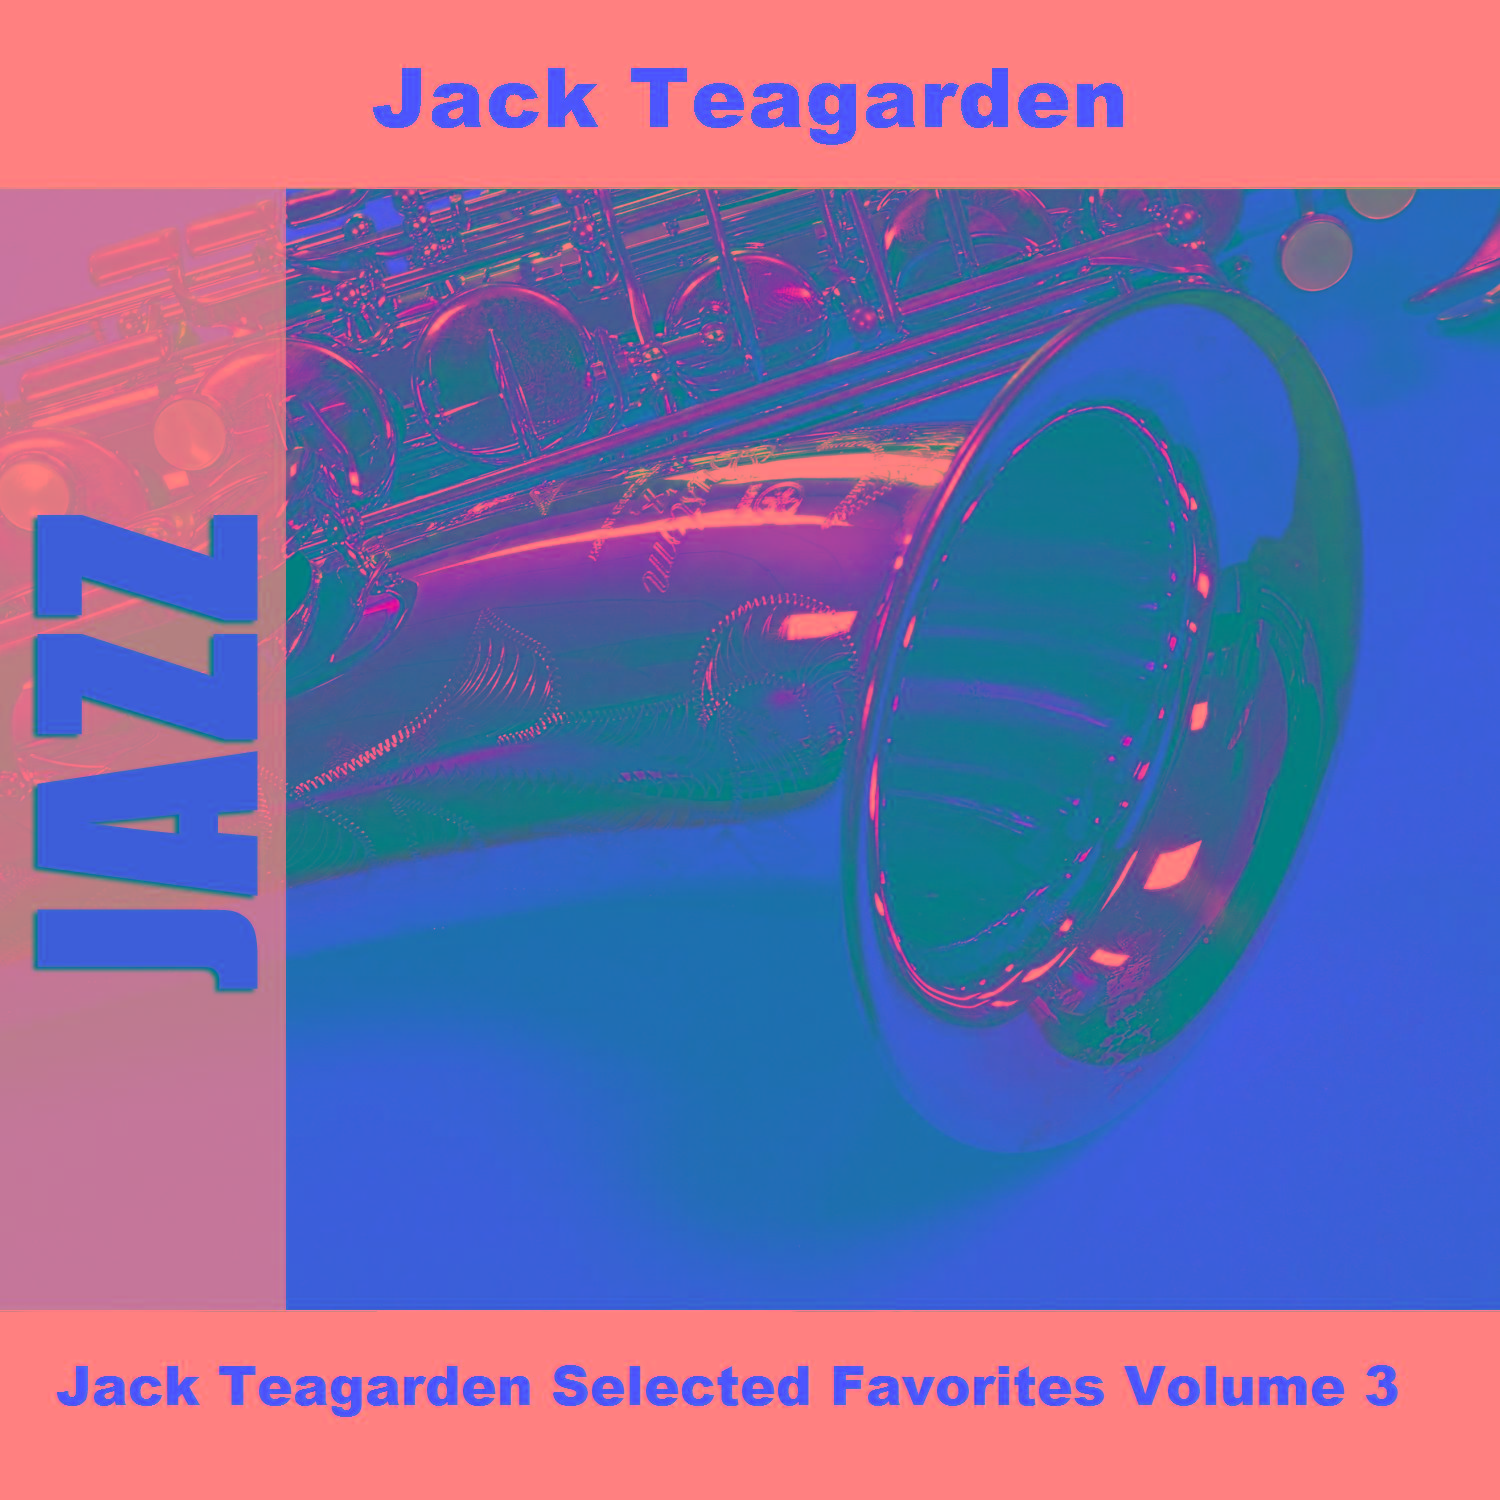 Jack Teagarden Selected Favorites Volume 3